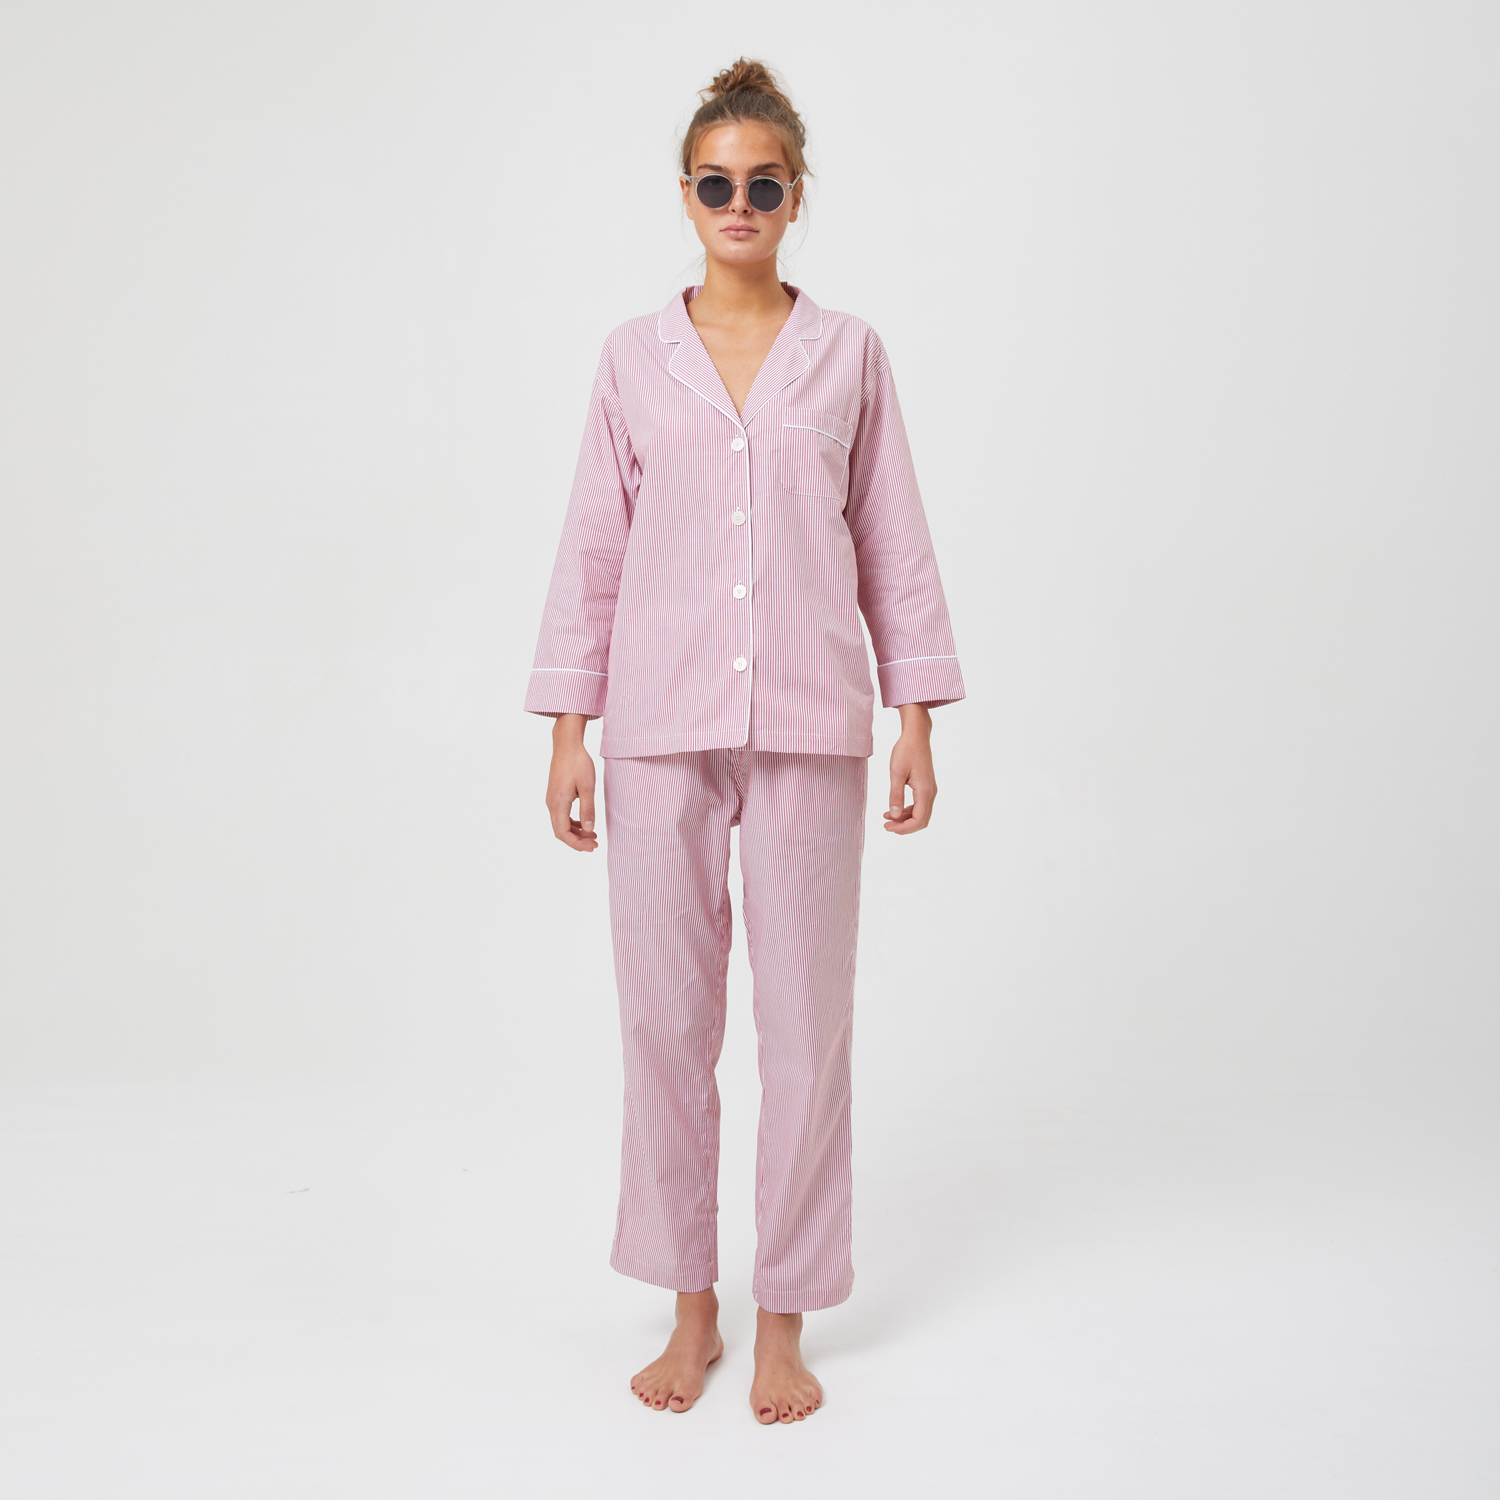 Eve Thin Stripe Red & White Pyjama | Womans Pyjamas | Nufferton Loungewear  – Nufferton - Unisex Loungewear - Official site